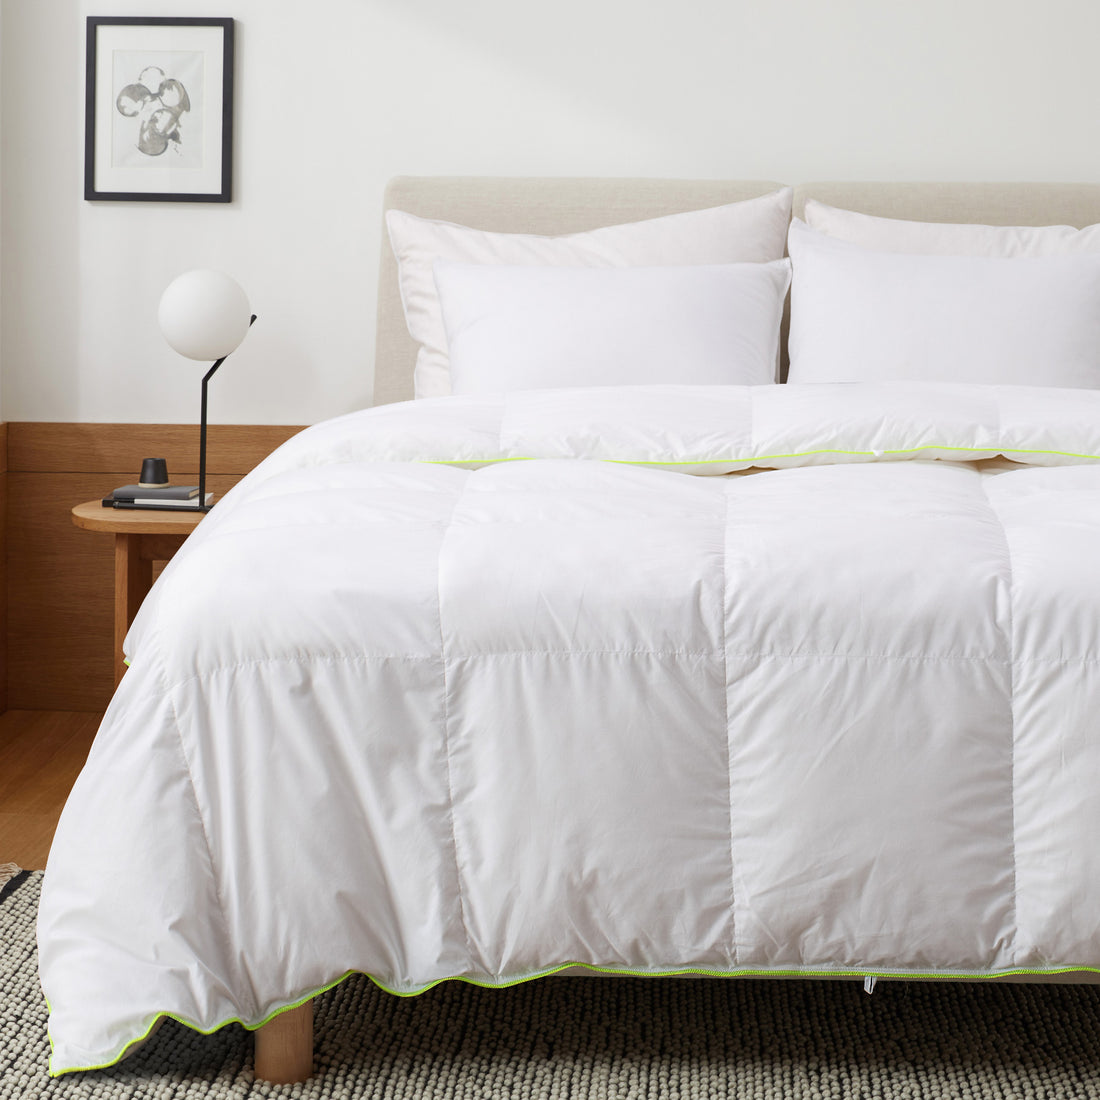 The Benefits of Hypoallergenic and OEKO-TEX Certified Down Comforters for a Good Night’s Sleep